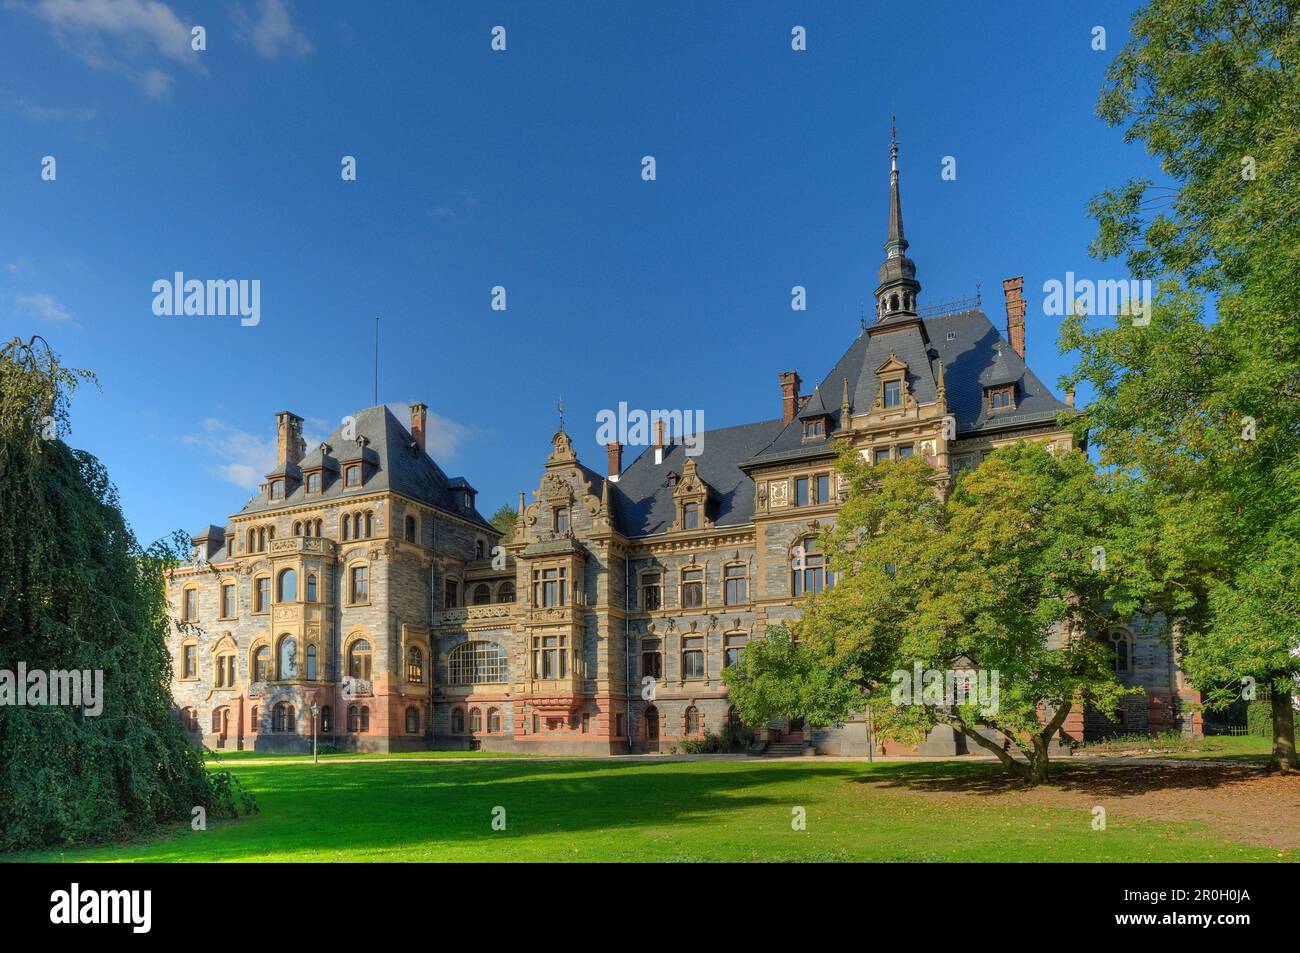 Lieser castle with Park, Lieser, Rhineland Palatinate, Germany Stock Photo